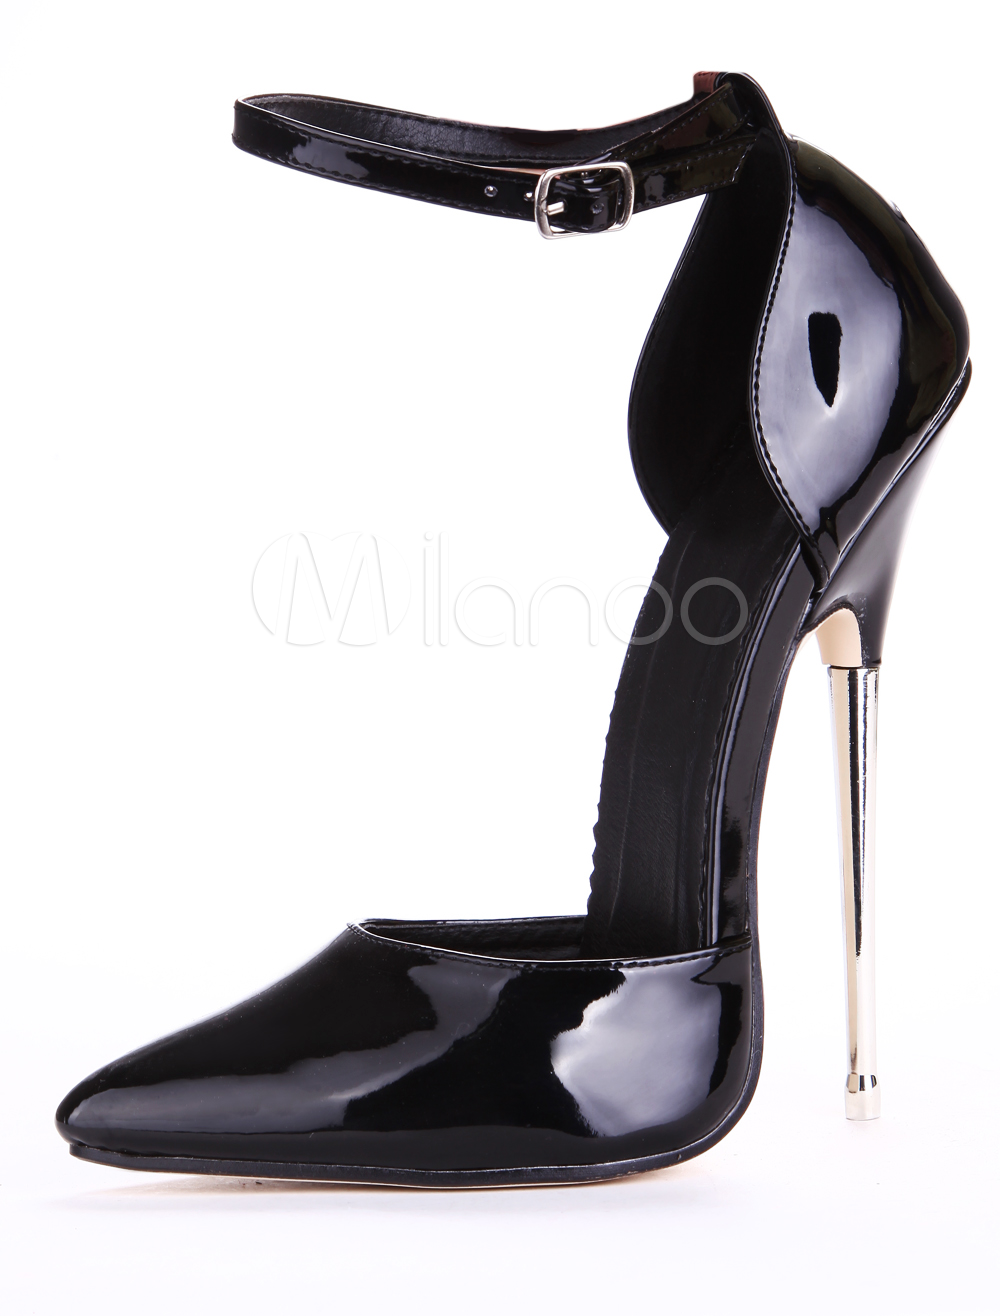 Shop amazing 6.3 inch metal heeled stilettos – High Heels Daily